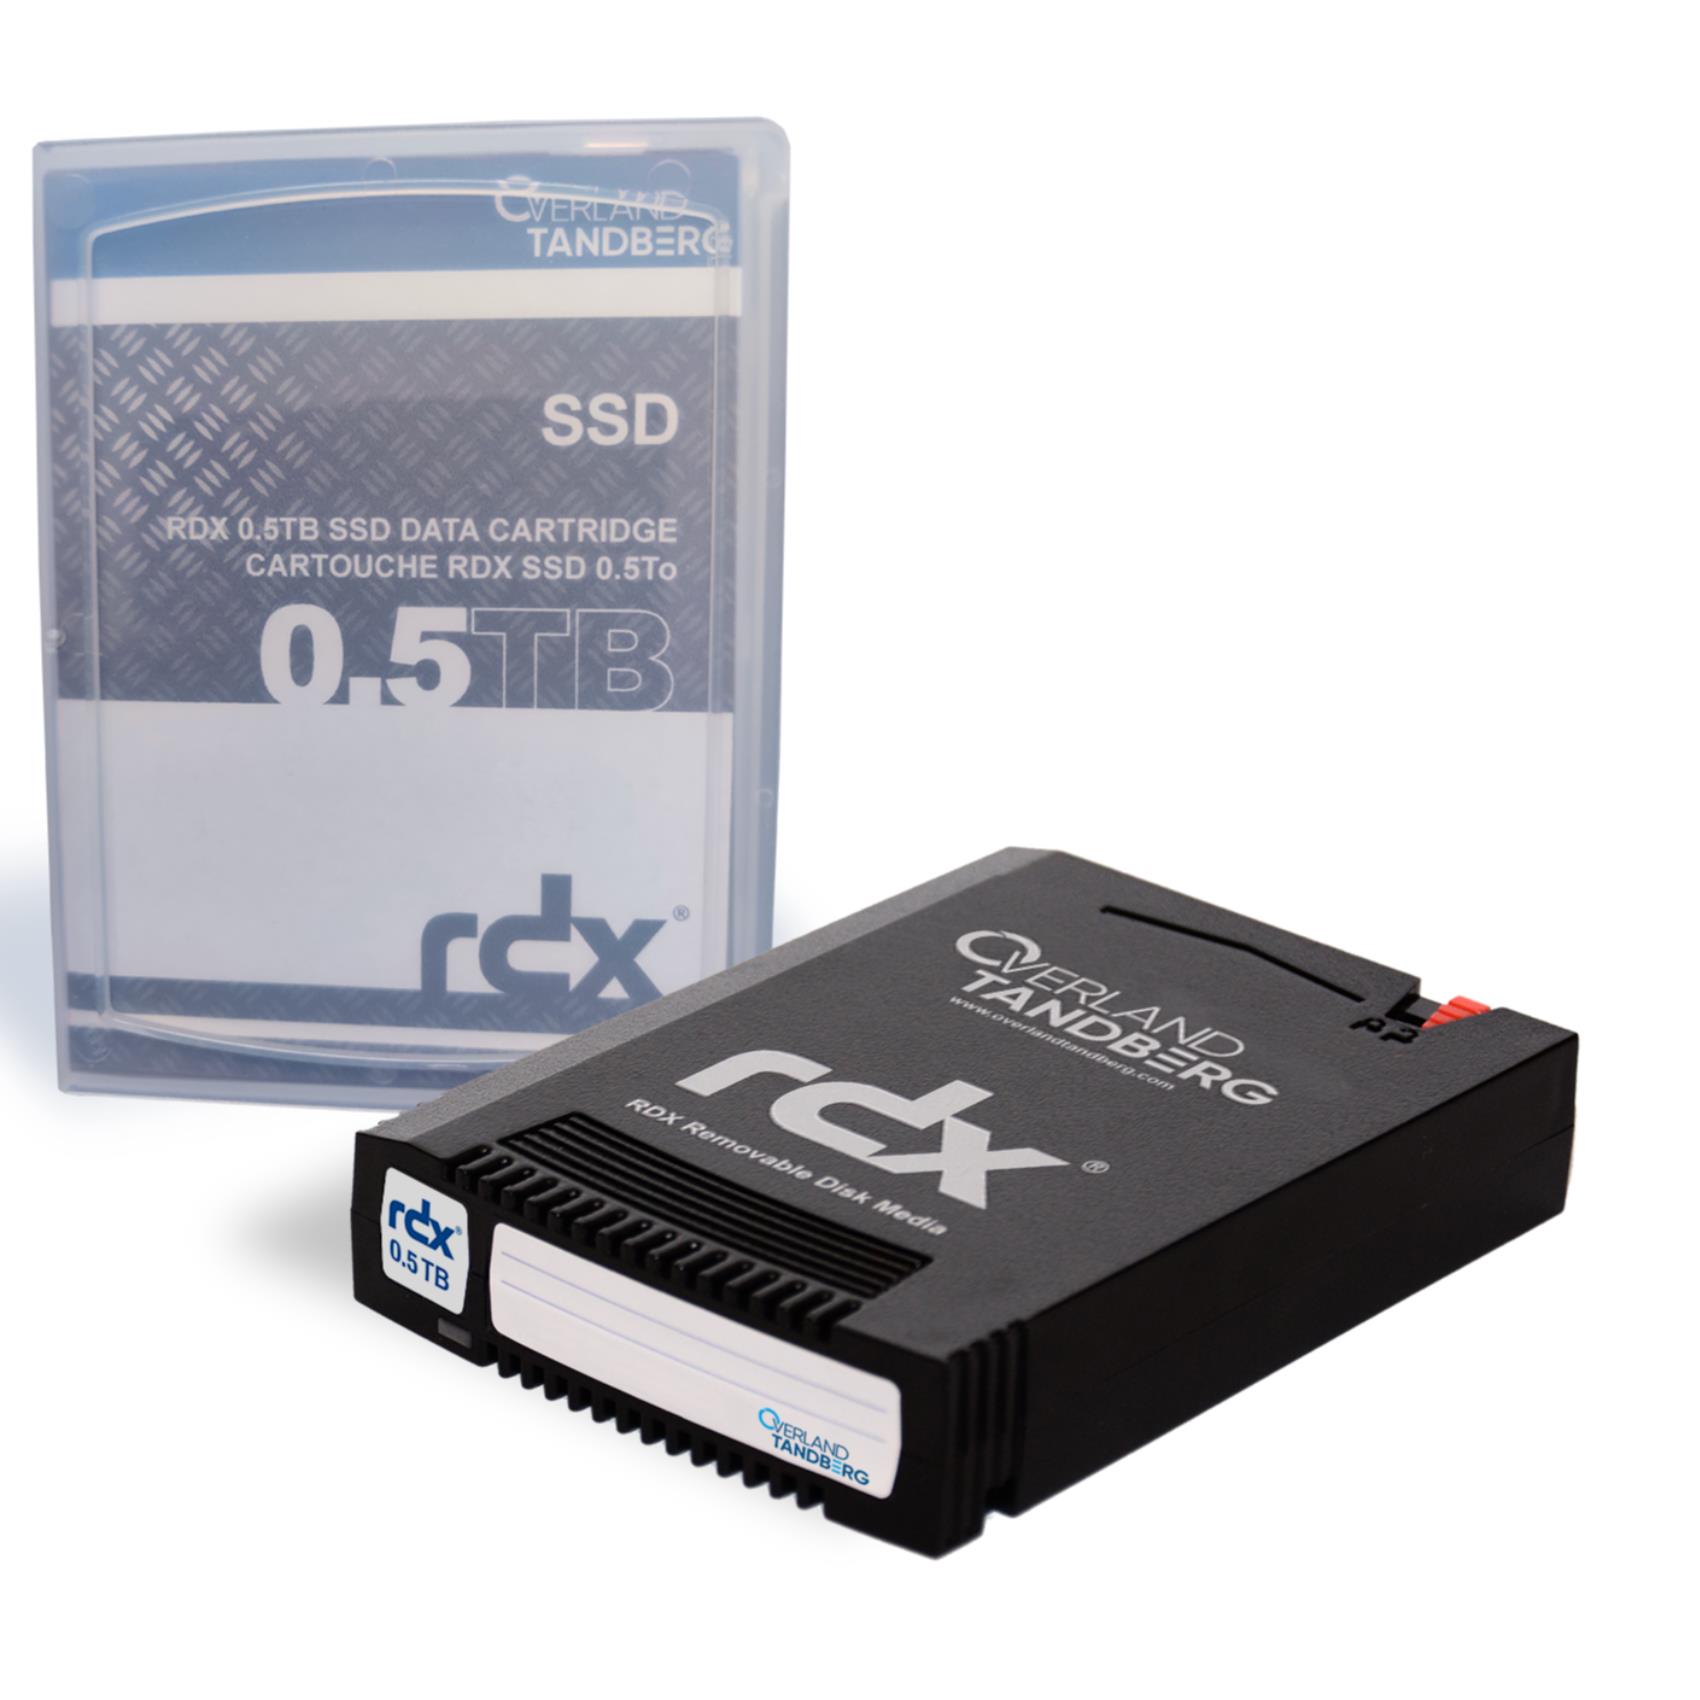 RDX SSD CARTUCCIA 500 GB CARTRDIGE